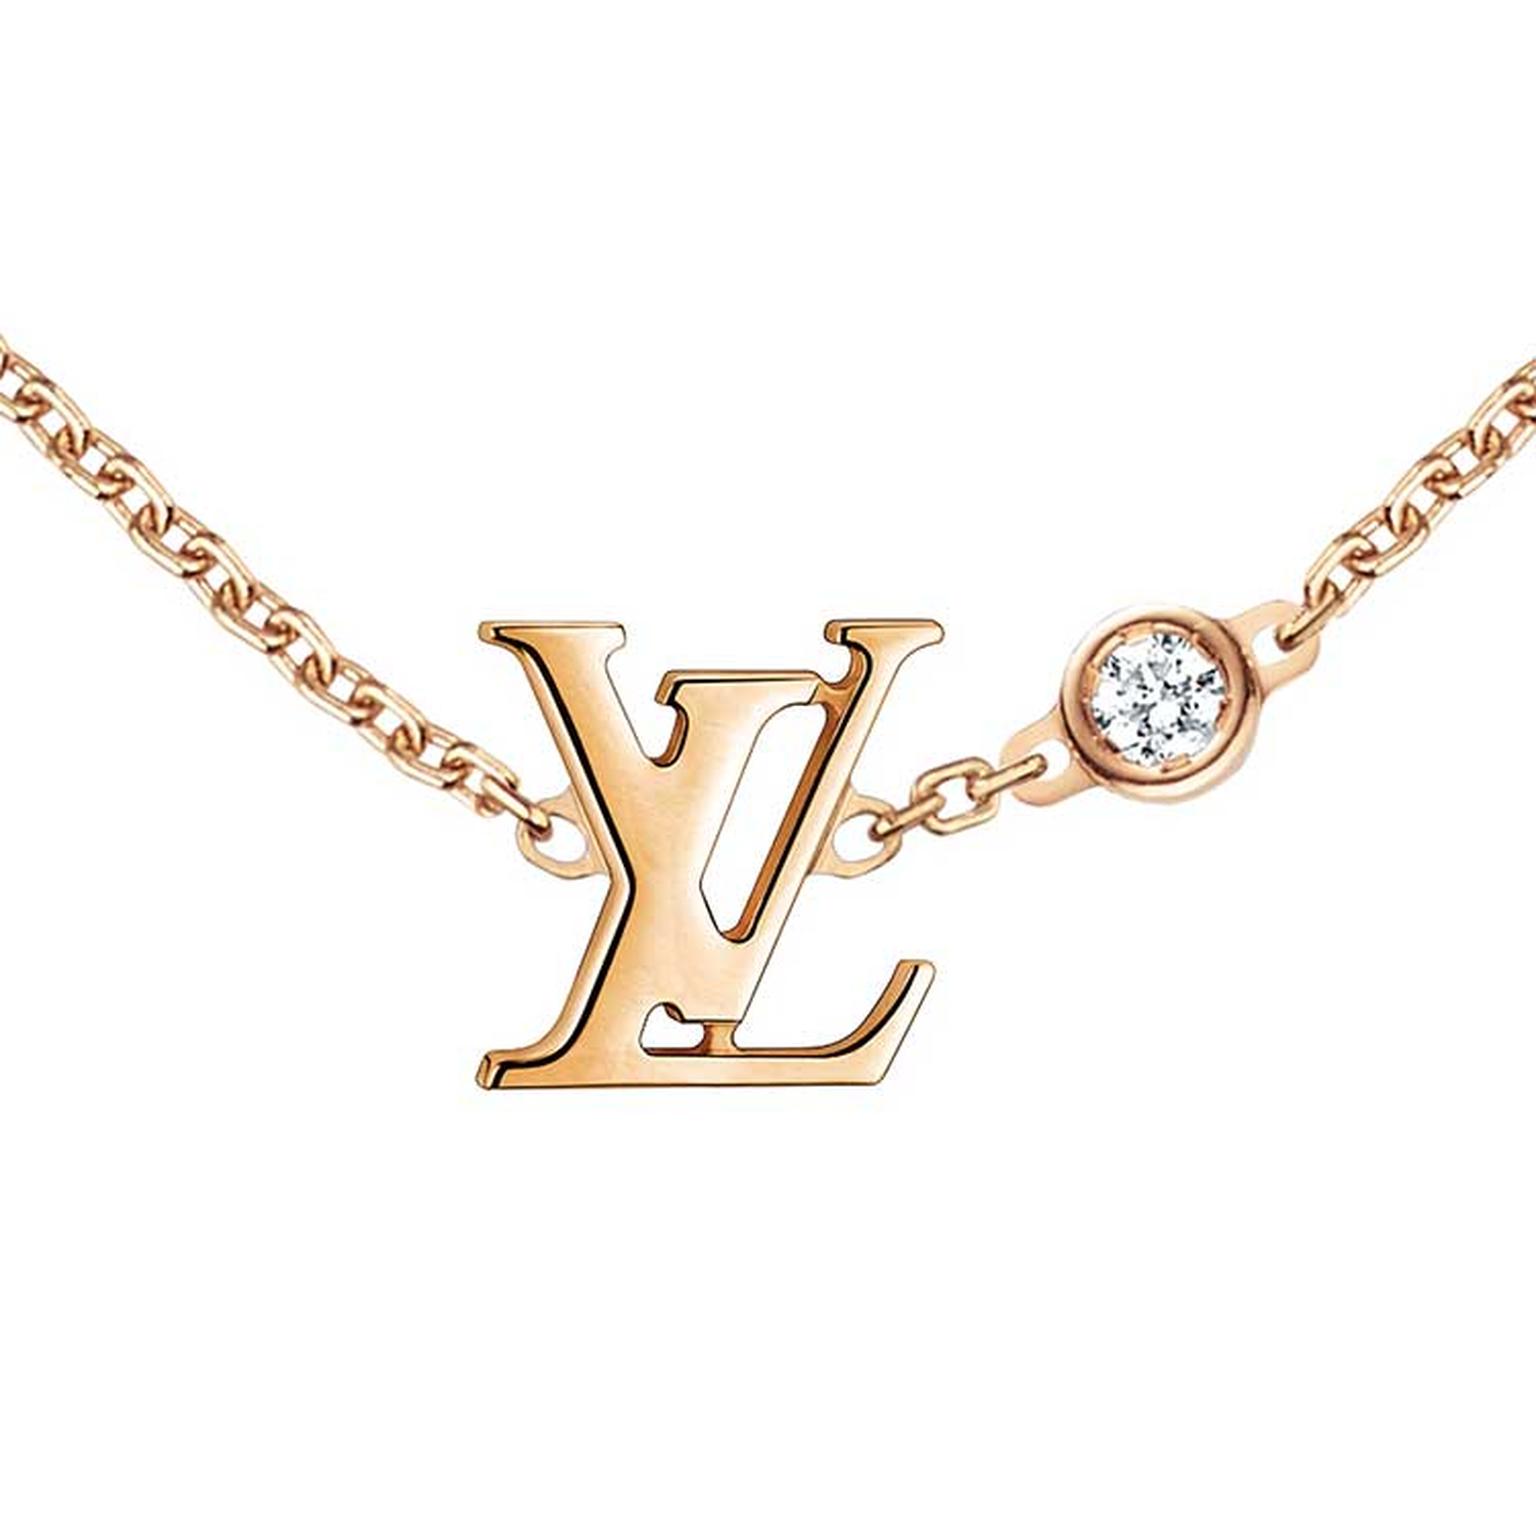 Louis Vuitton Idylle Blossom gold necklace